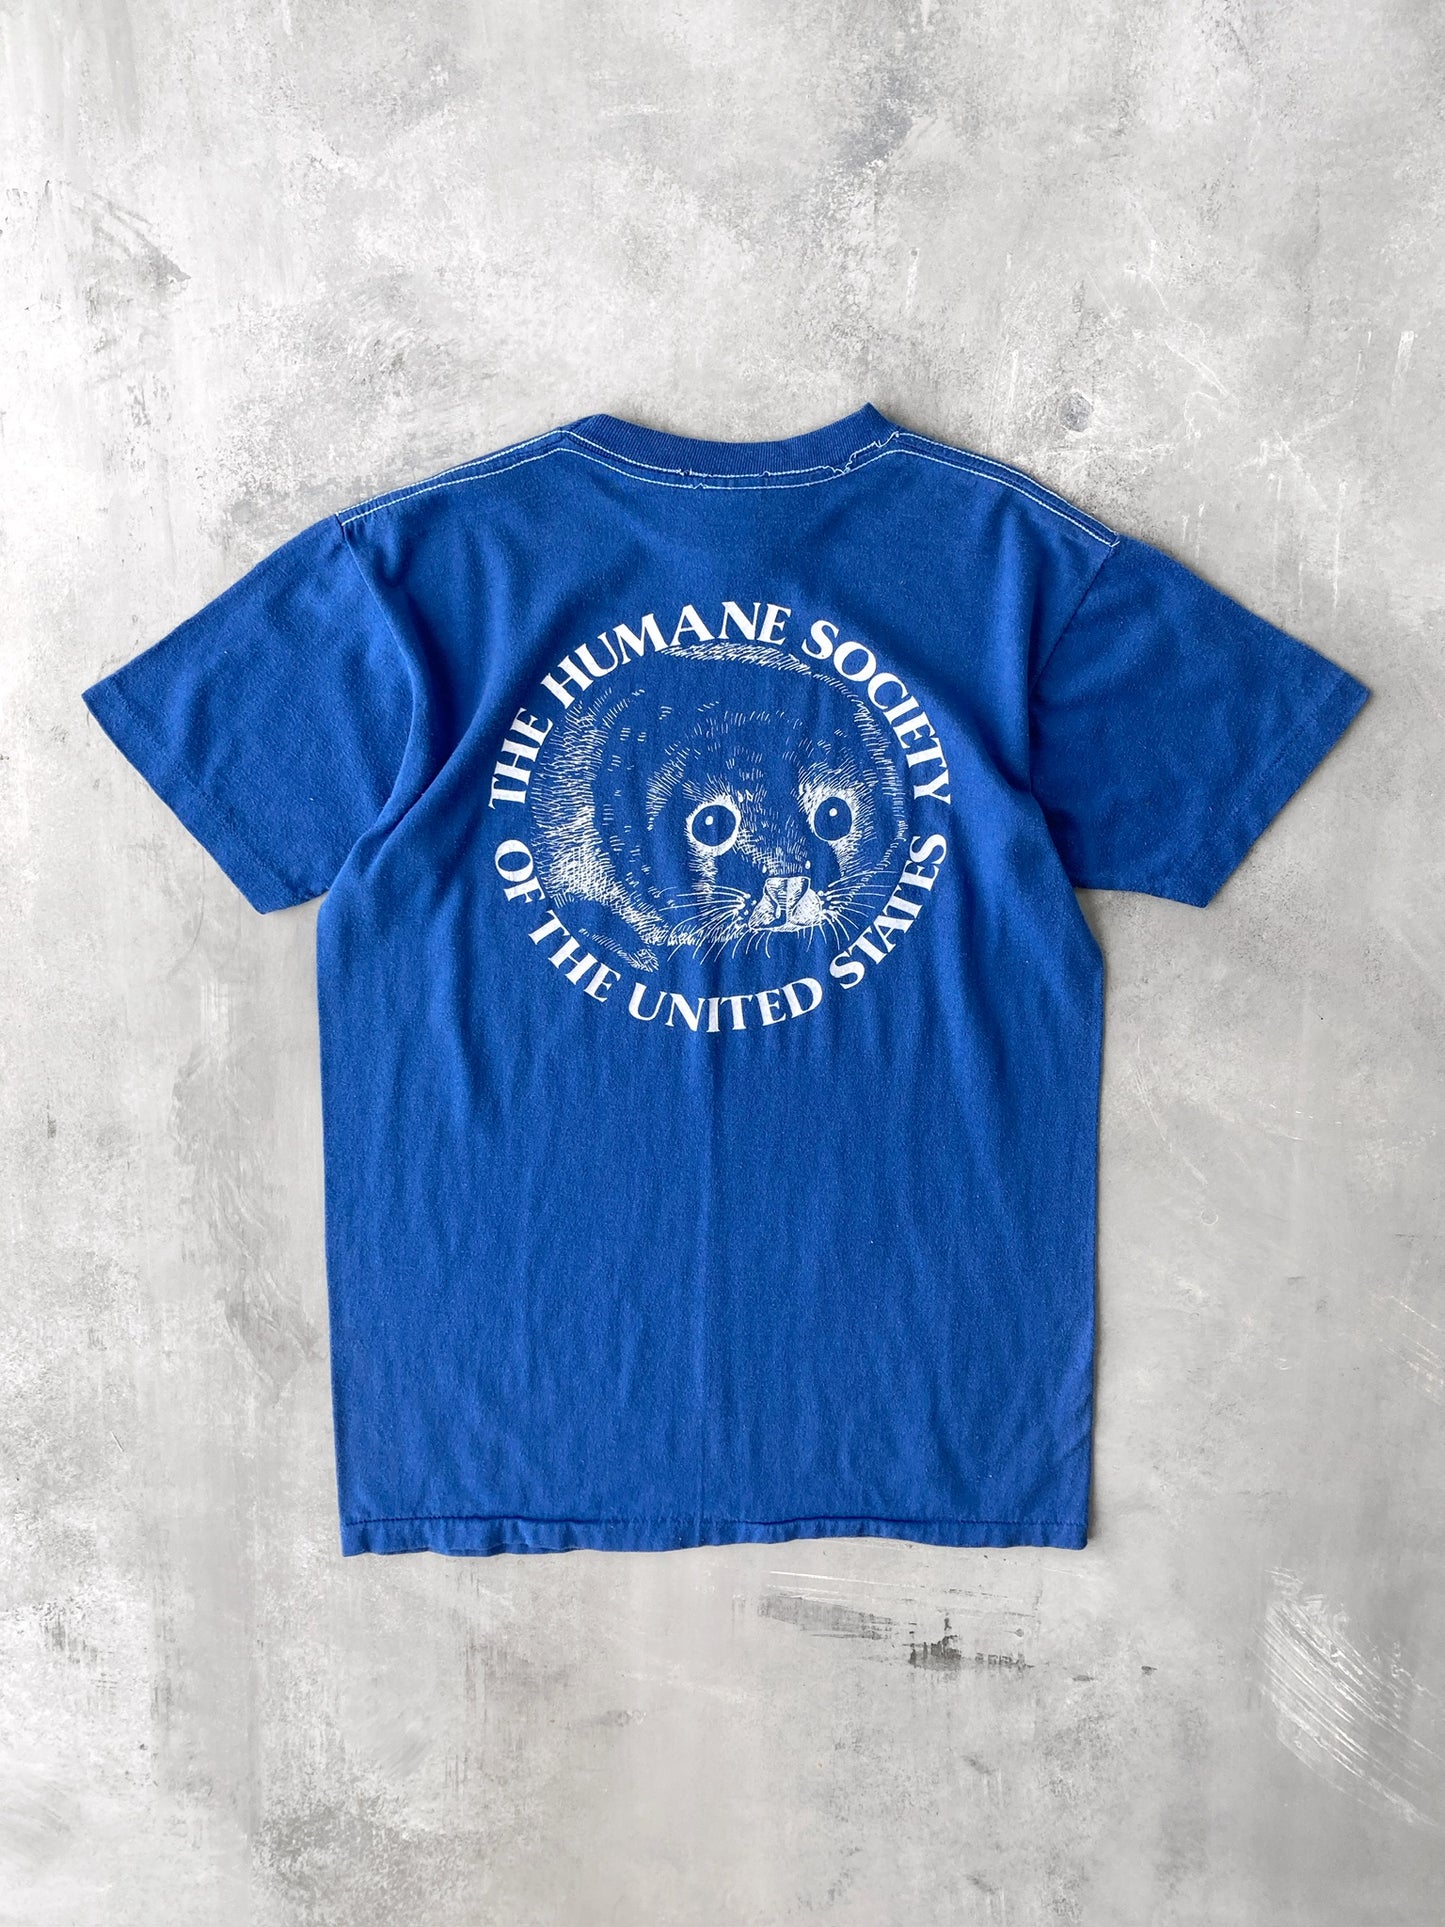 Humane Society T-Shirt 80's - Small / Medium